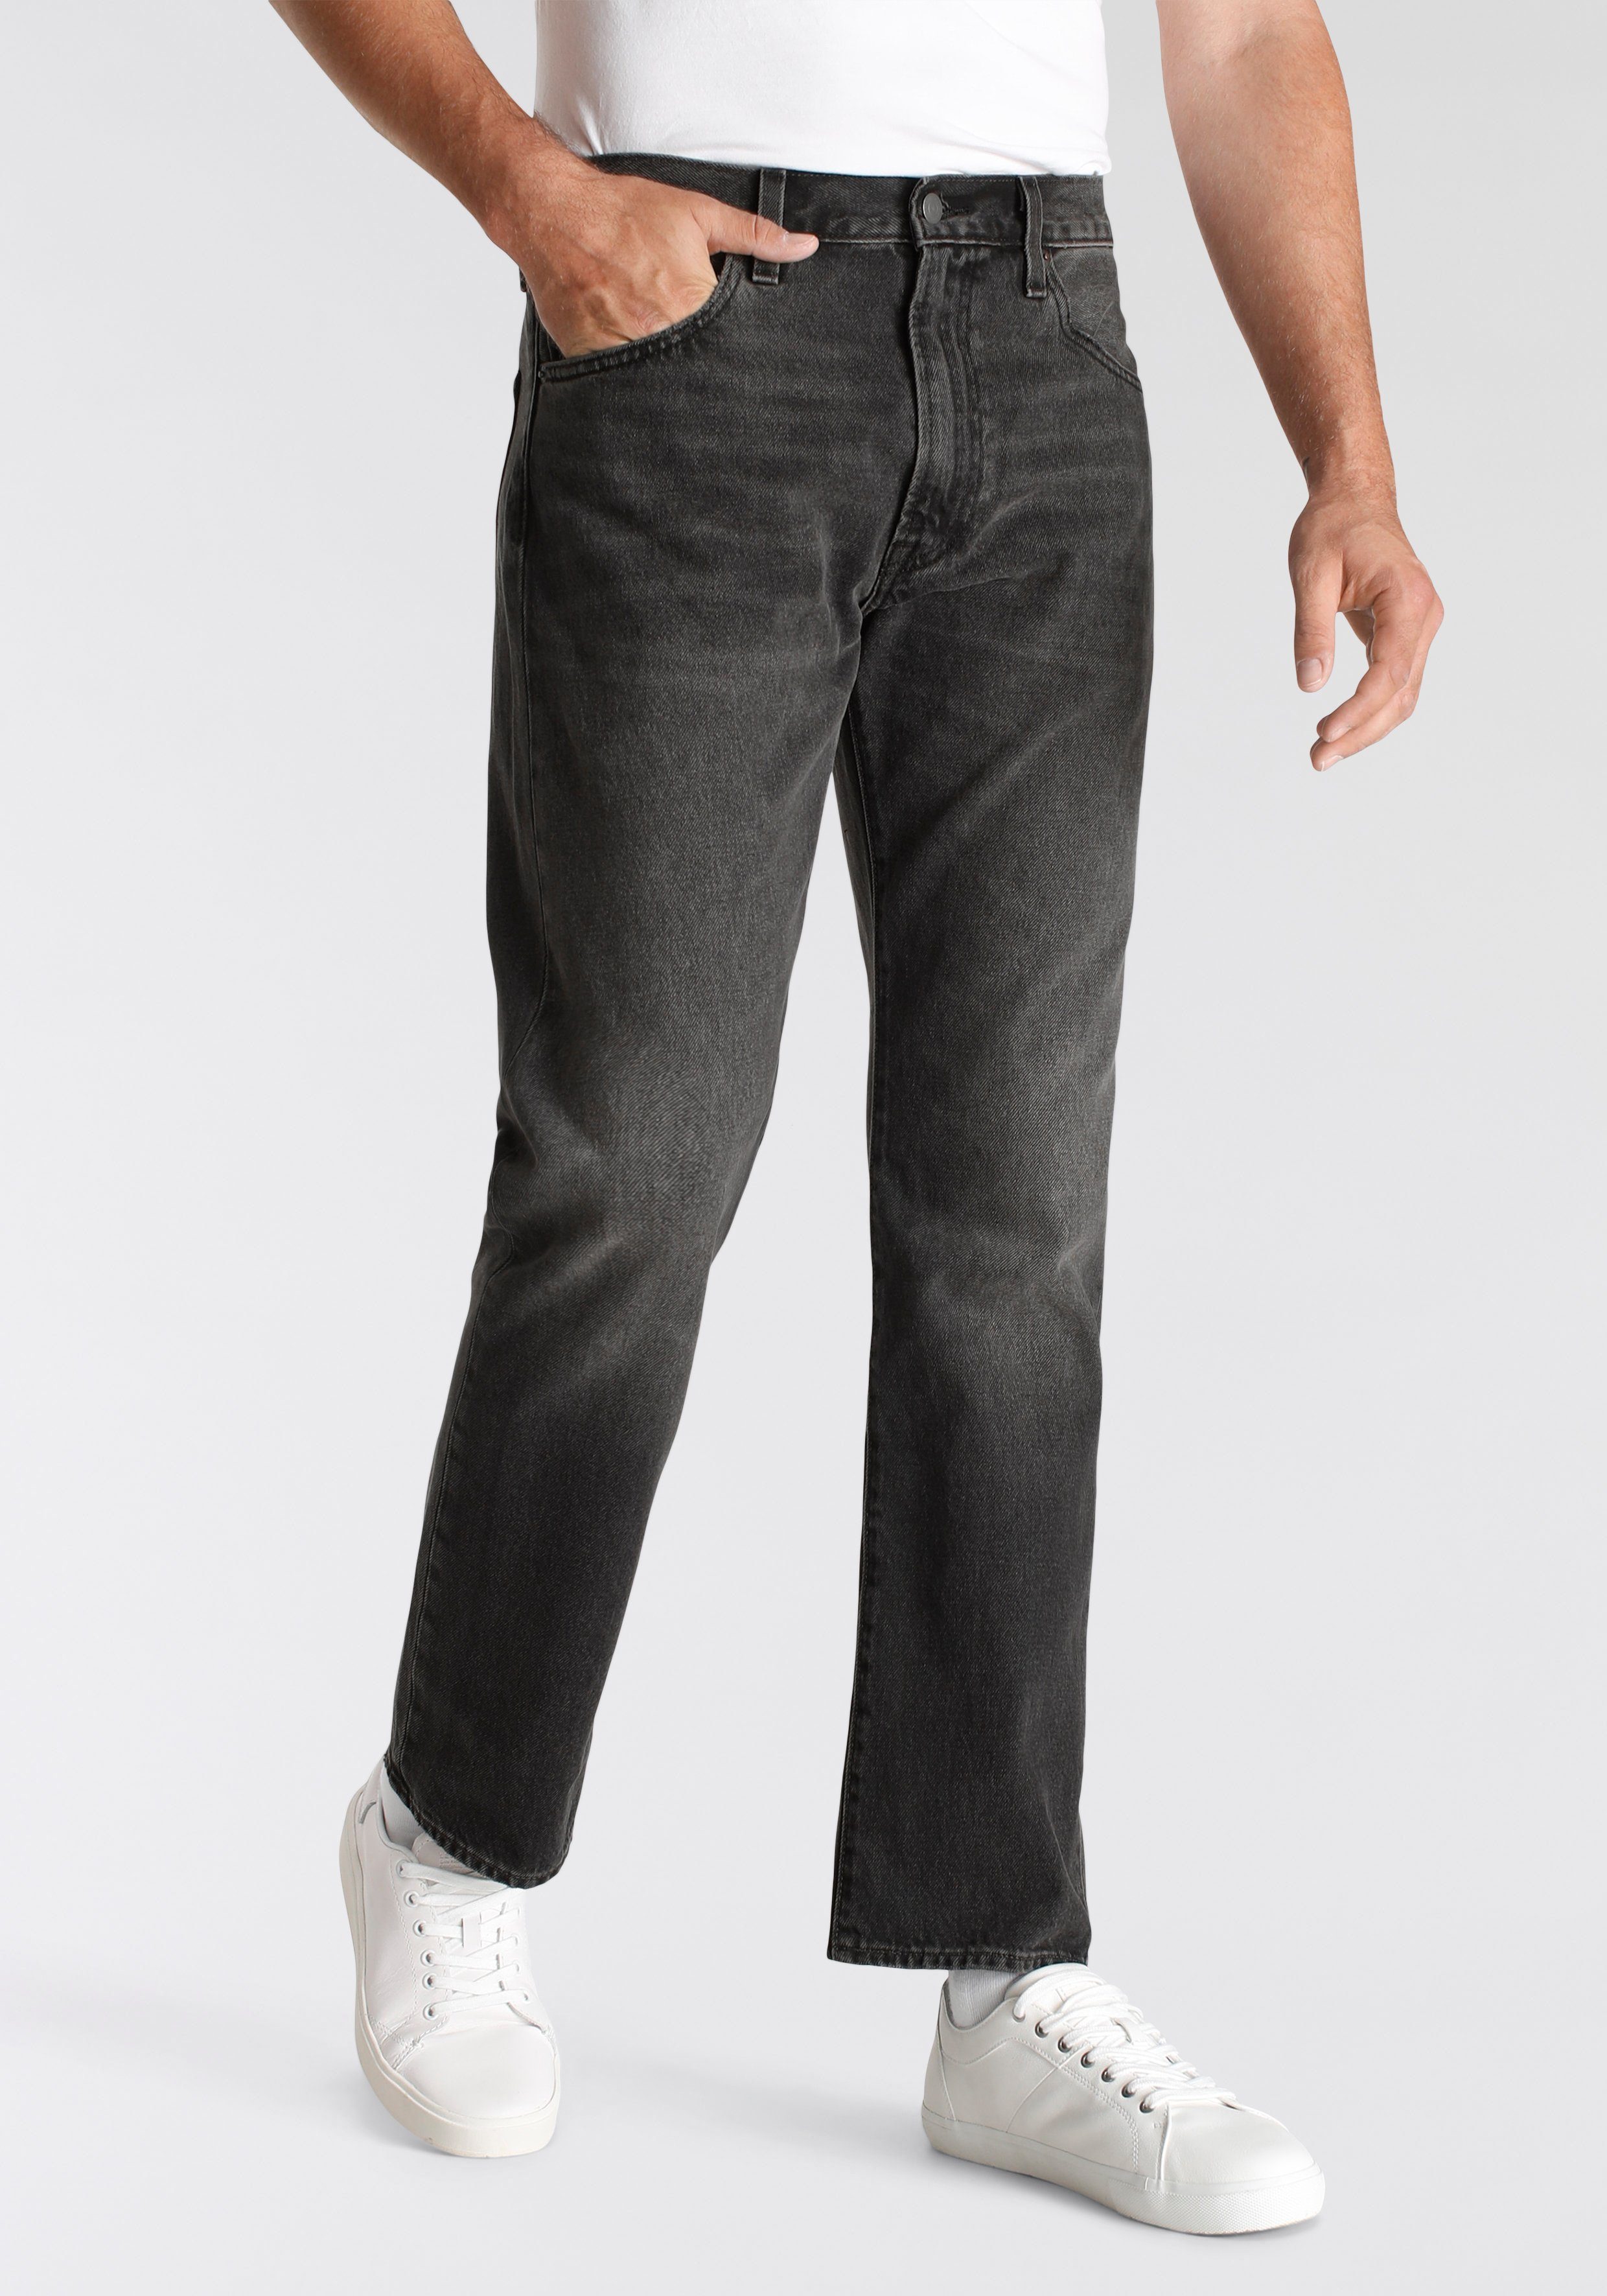 impressions Straight-Jeans Lederbadge mit 551Z AUTHENTIC Levi's® midnight